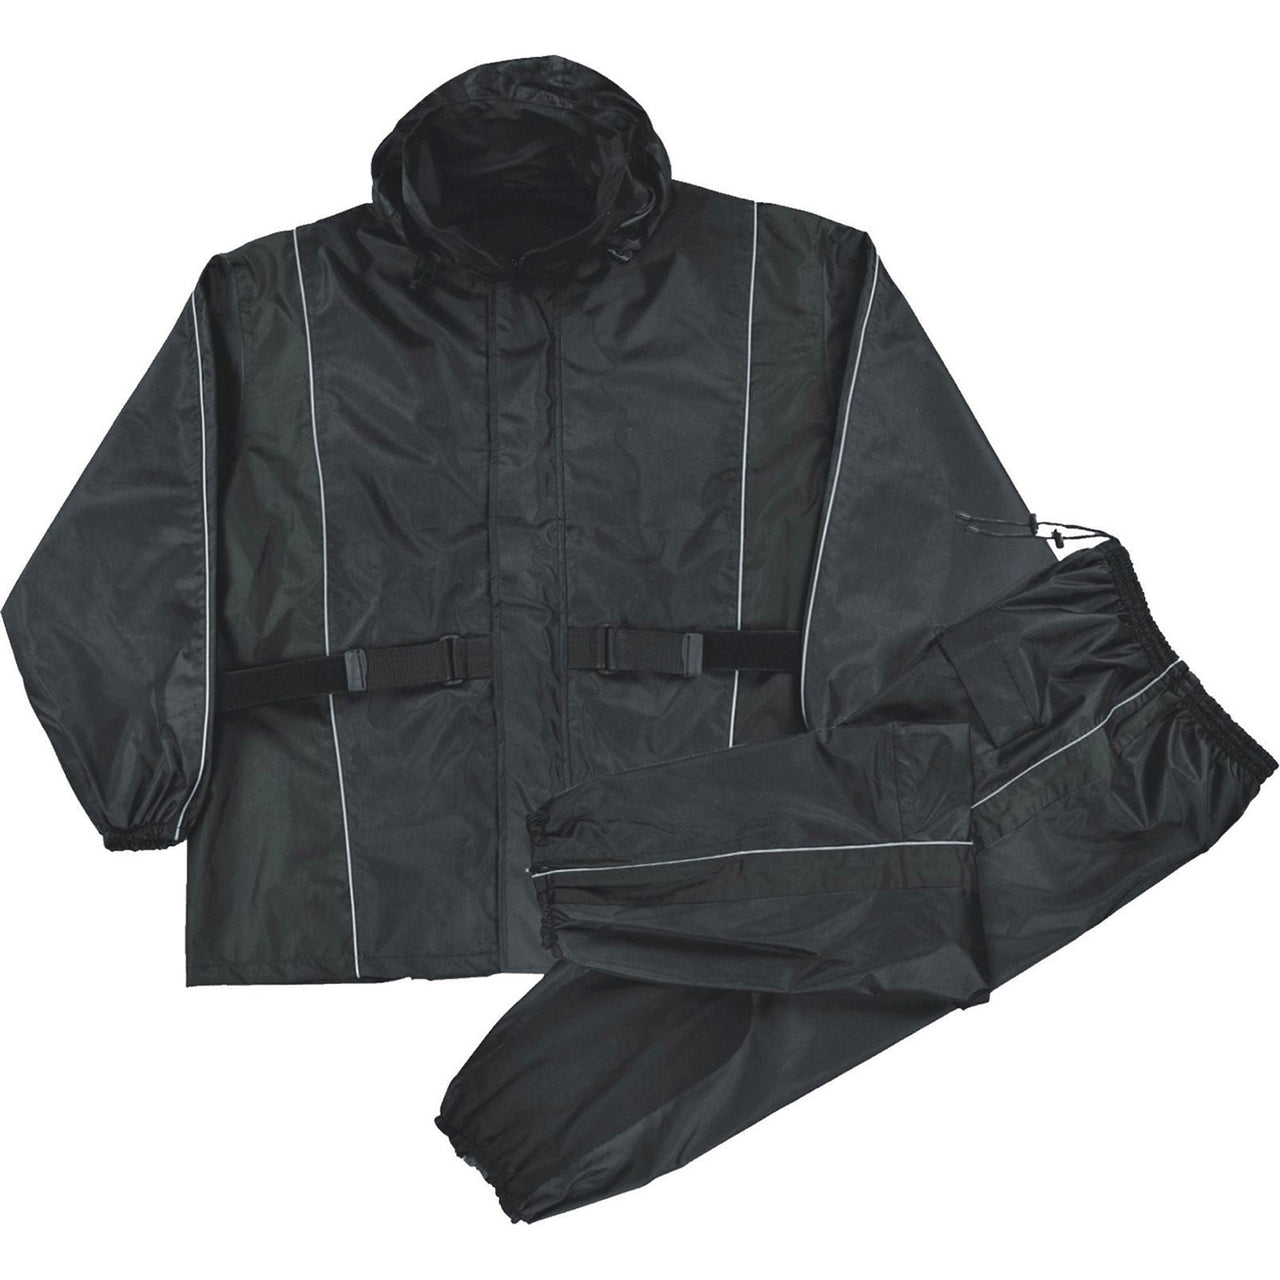 Men's Black Waterproof Rain Suit w/ Reflective Piping & Heat Guard - HighwayLeather